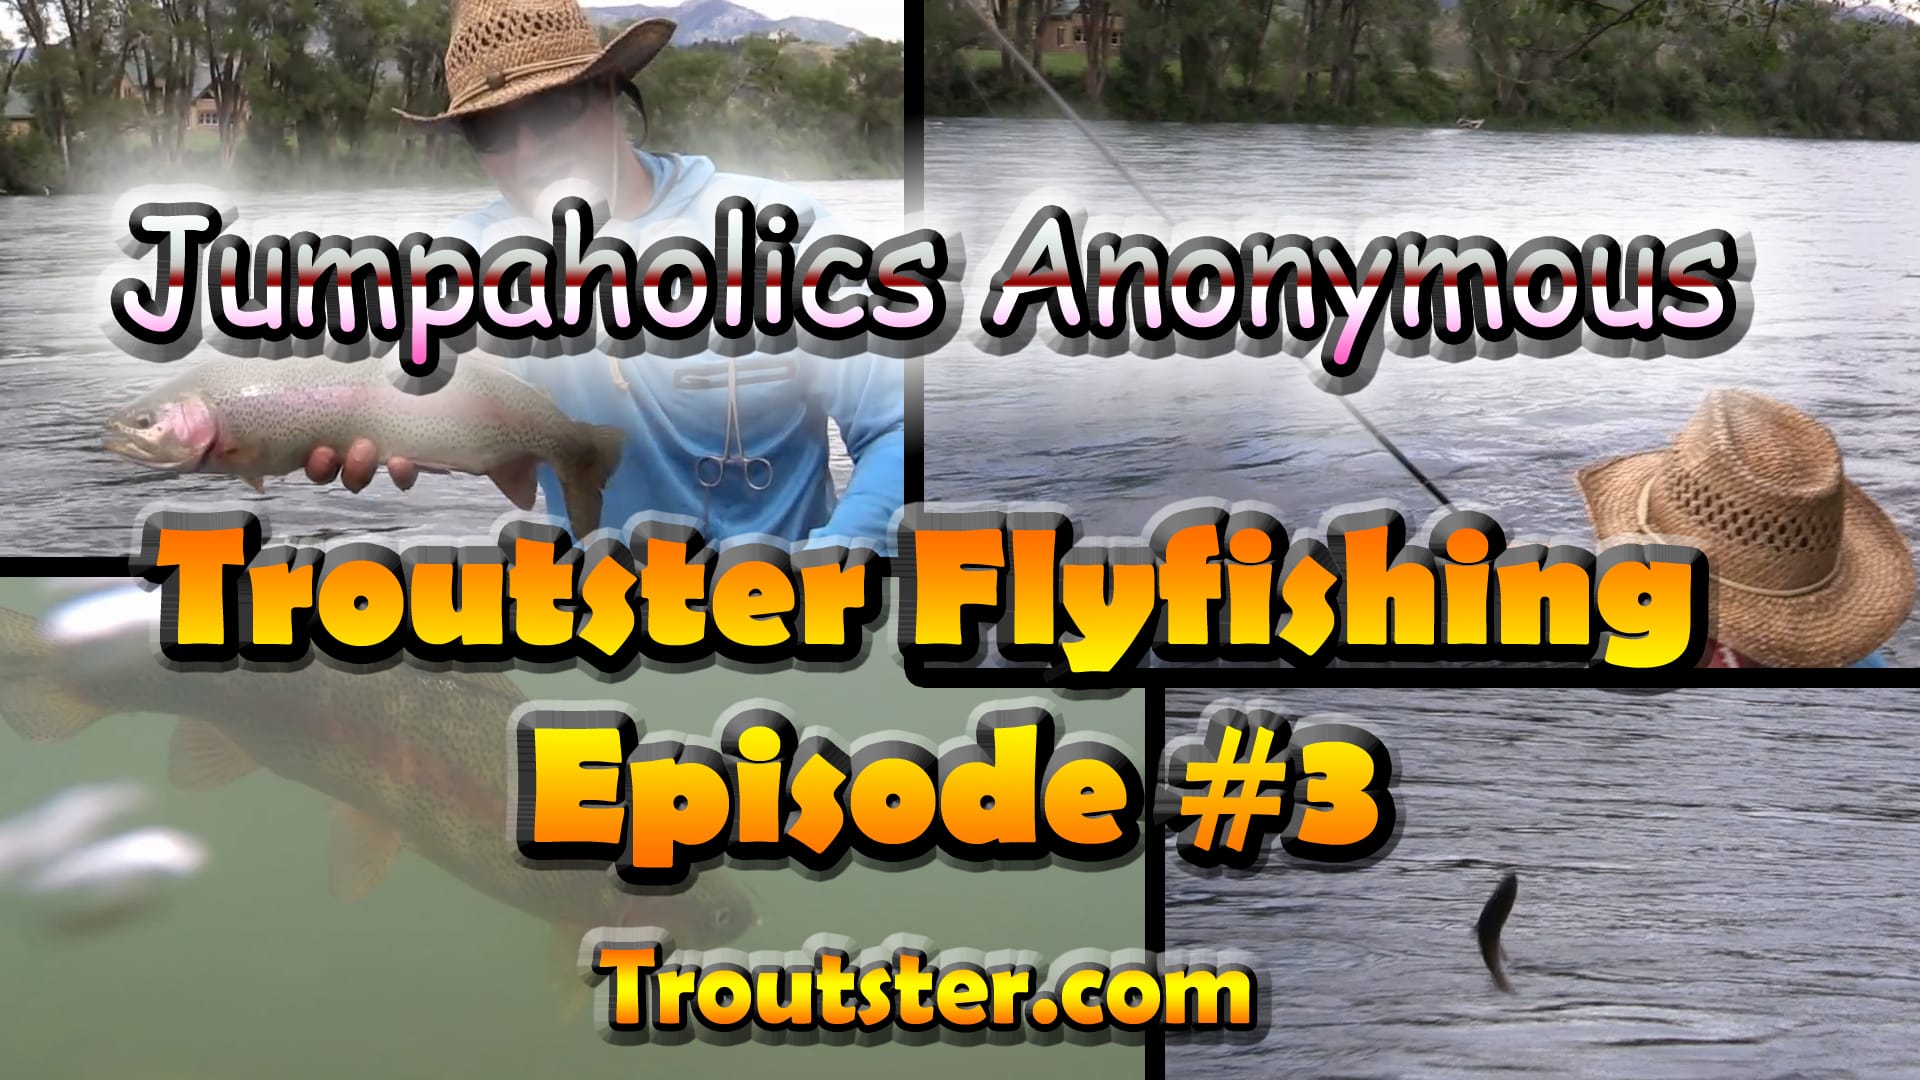 Jumpaholics Anonymous Big rainbow trout fly fishing video